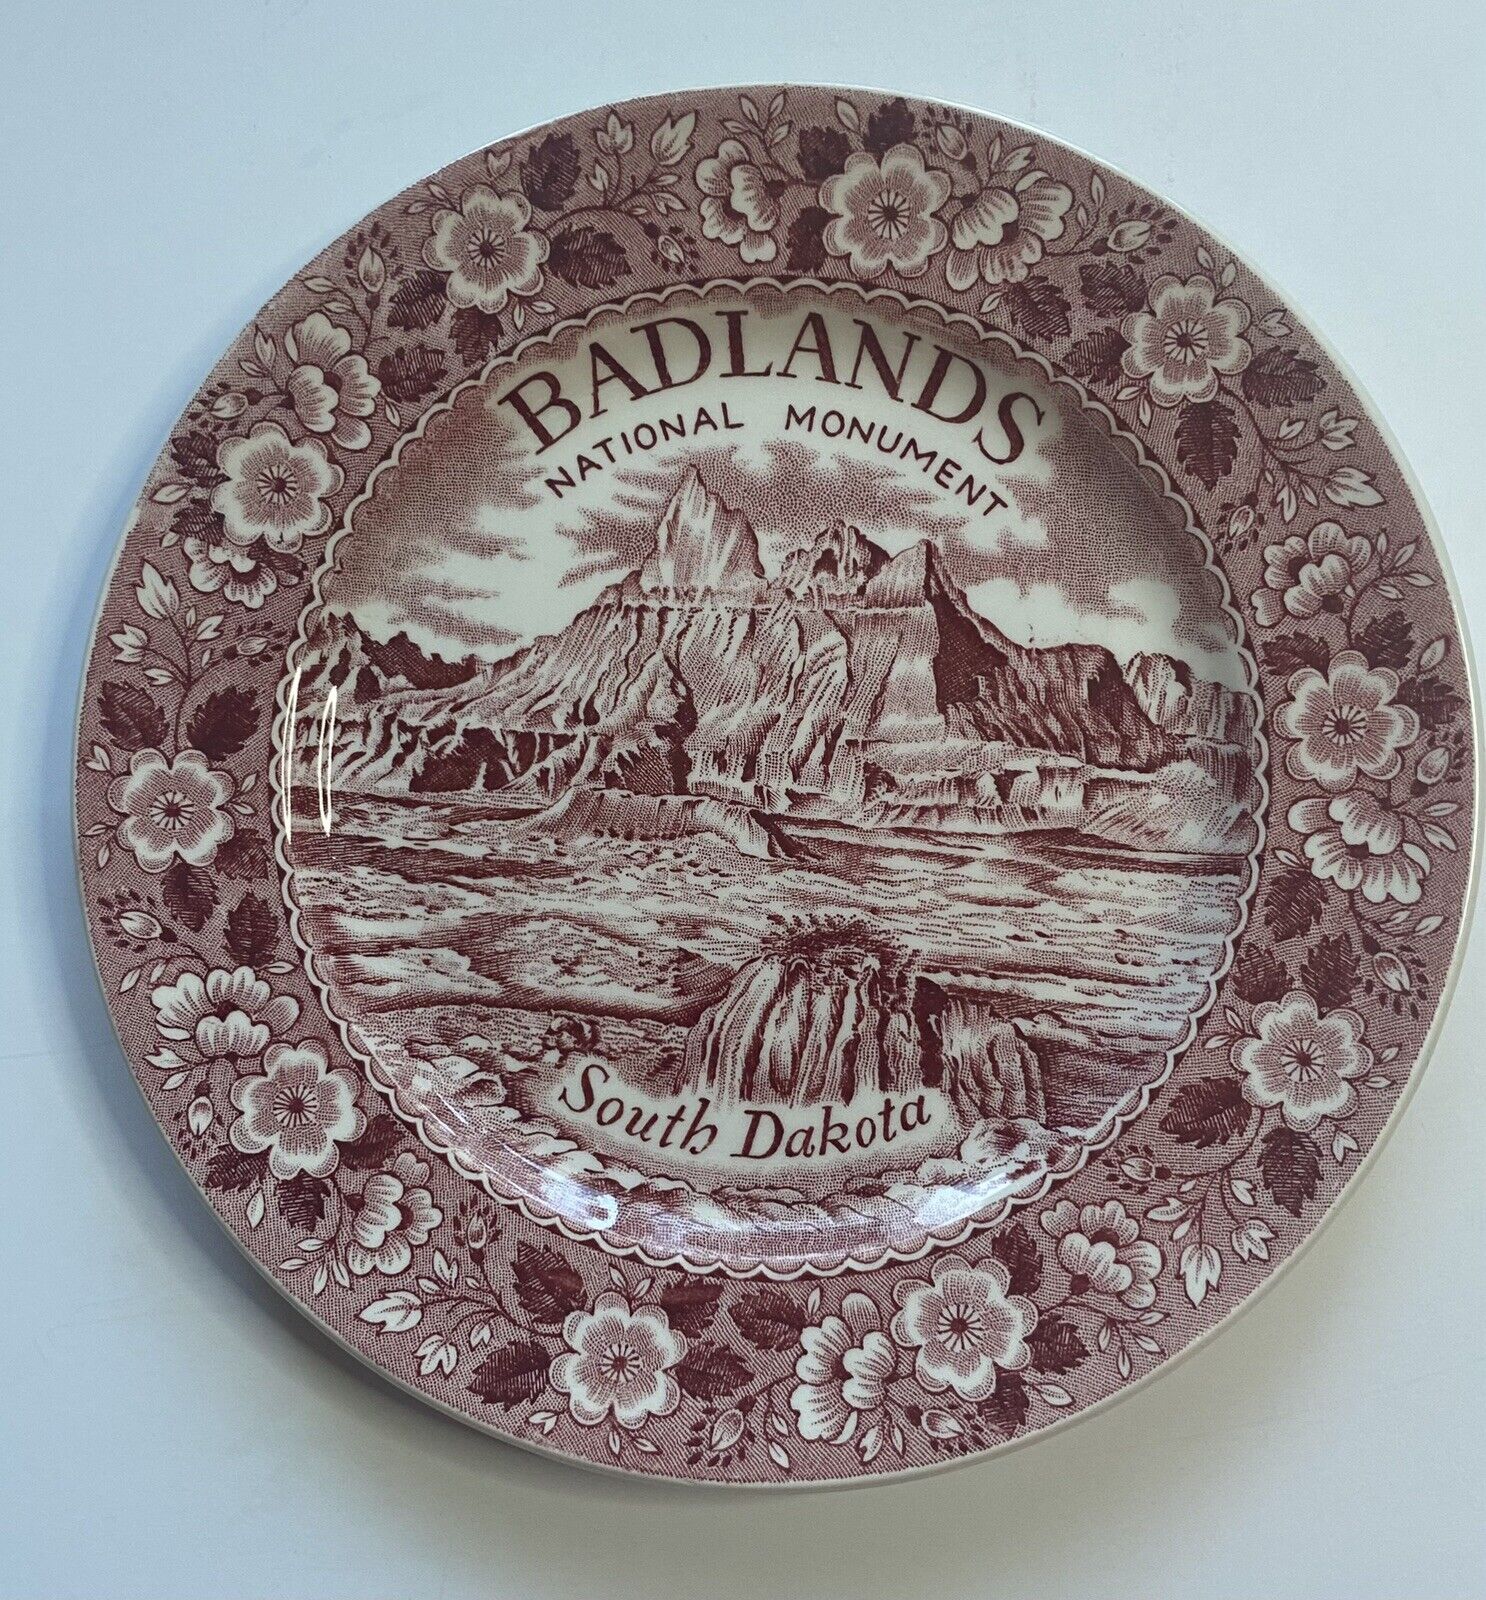 Vintage Badlands National Monument South Dakota Plate England Staffordshire 7”